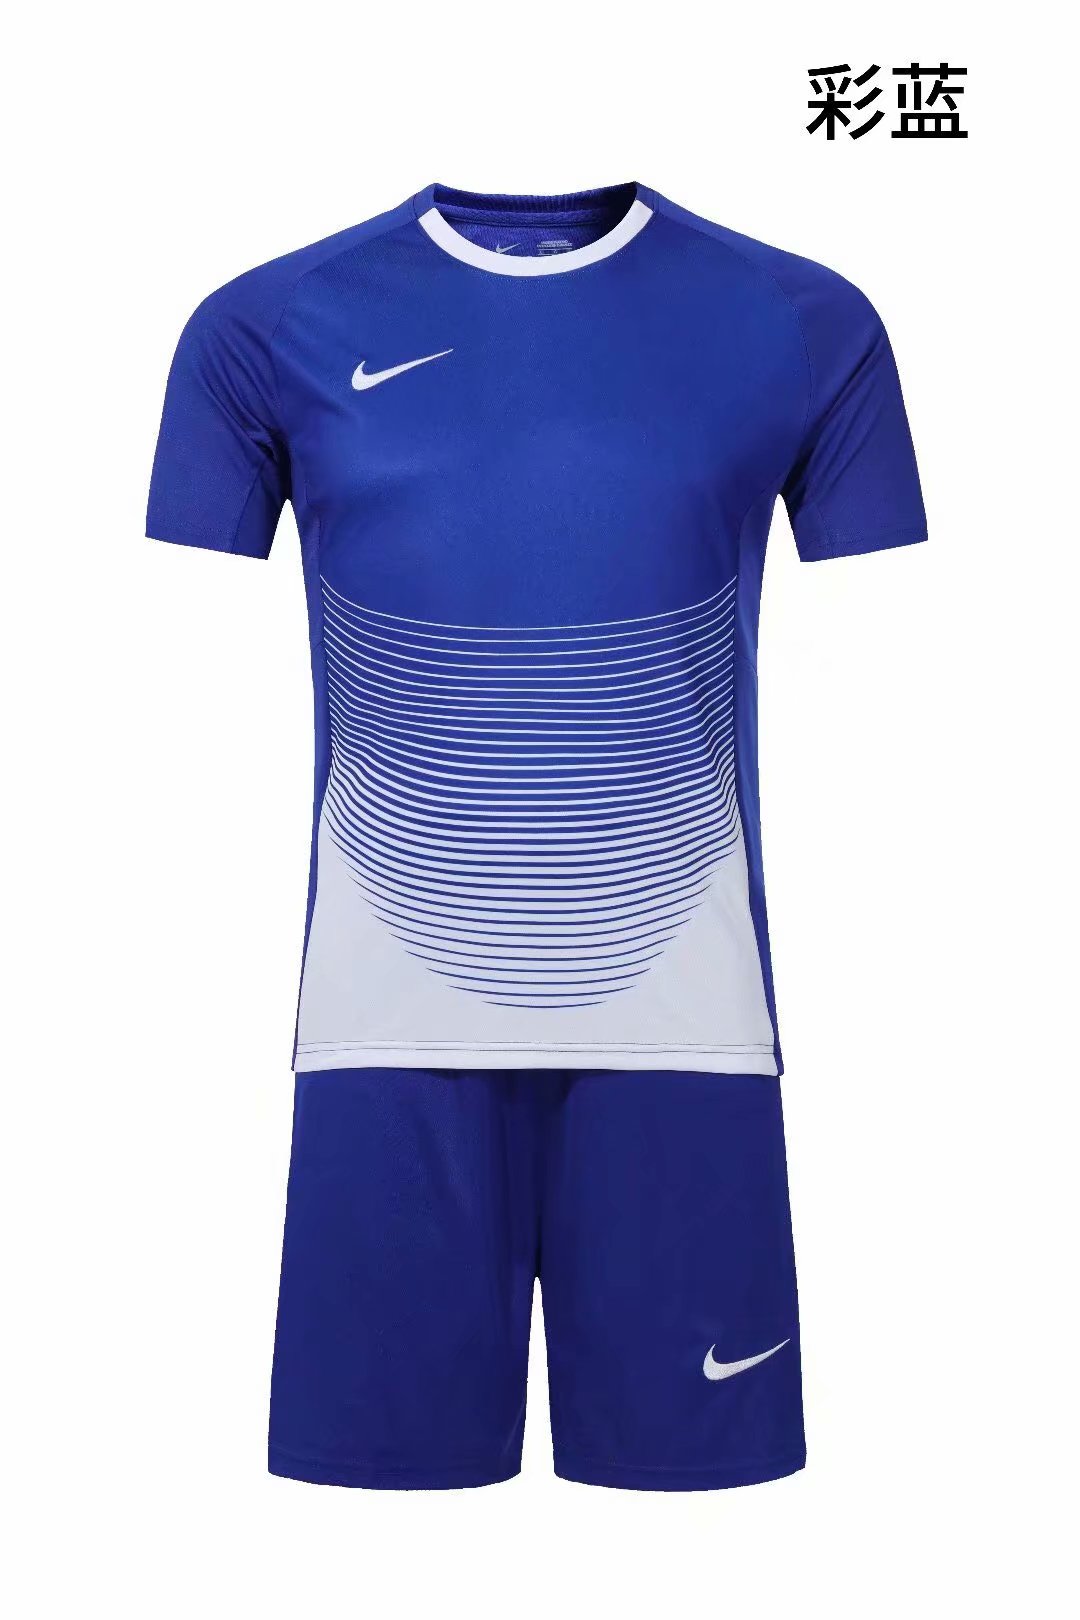 Nike Soccer Team Uniforms 017